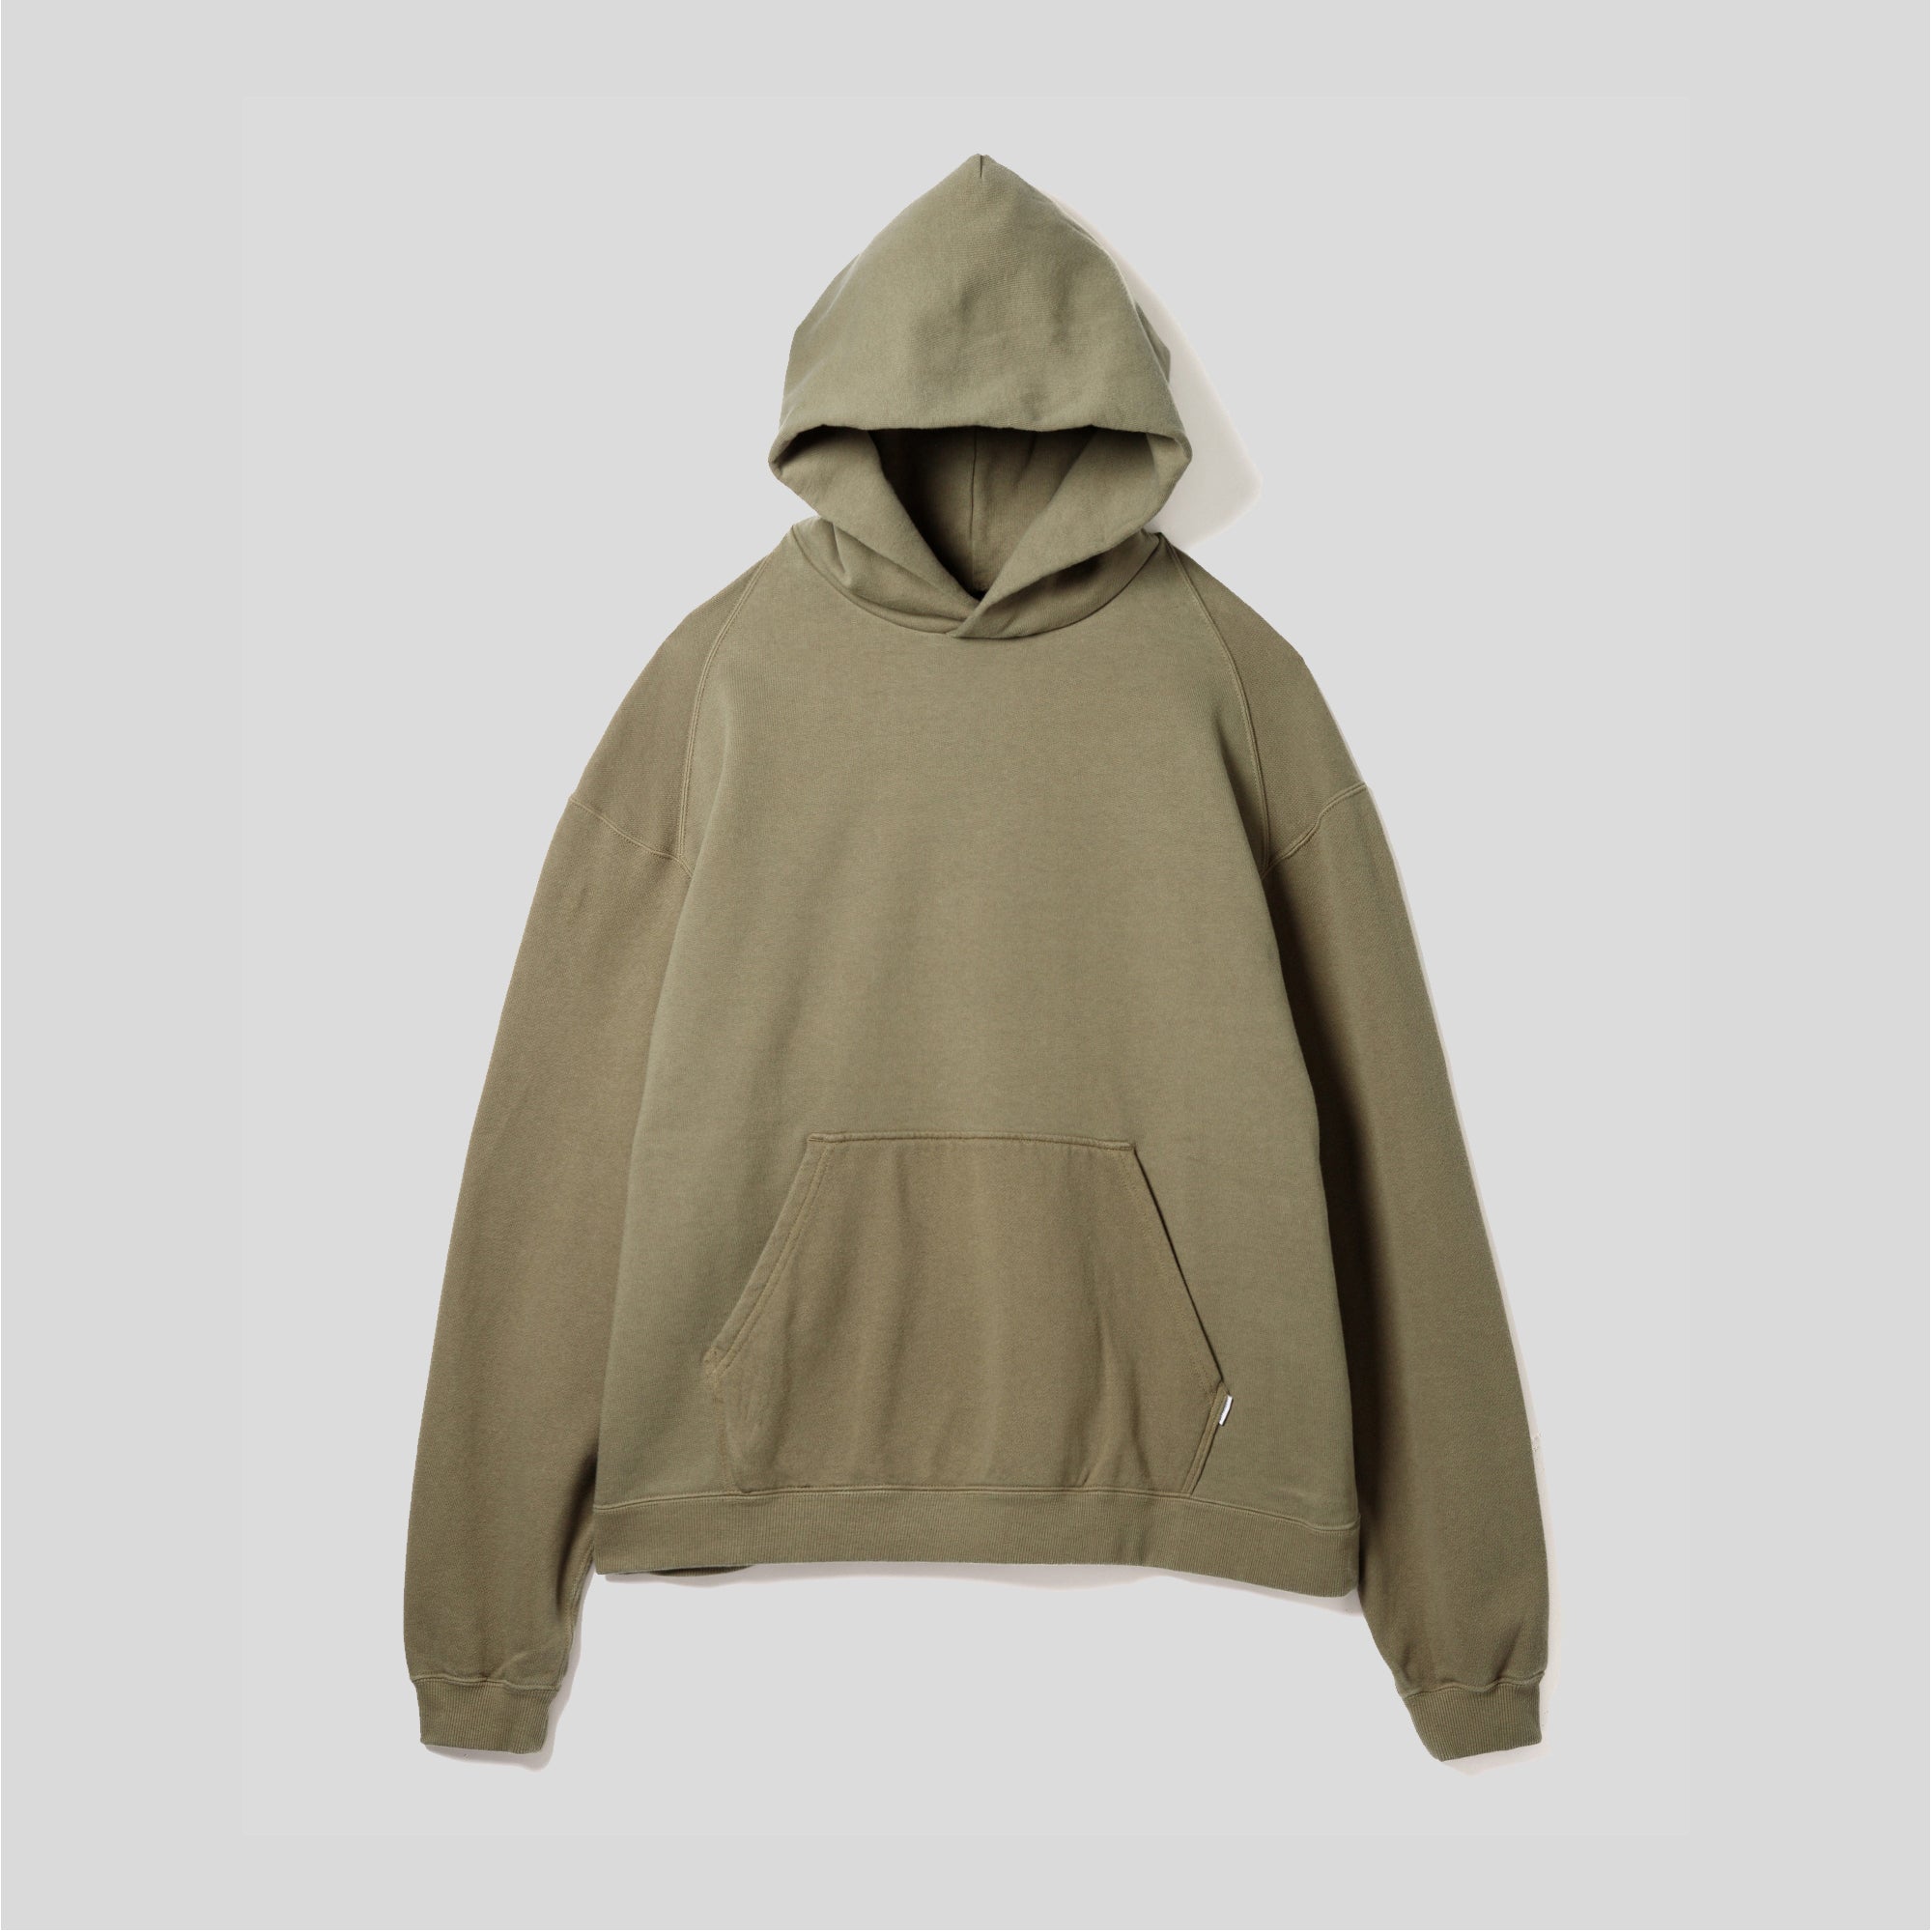 Sandinista(サンディニスタ) / Overdyed Hooded Sweatshirt [SPR23-01 